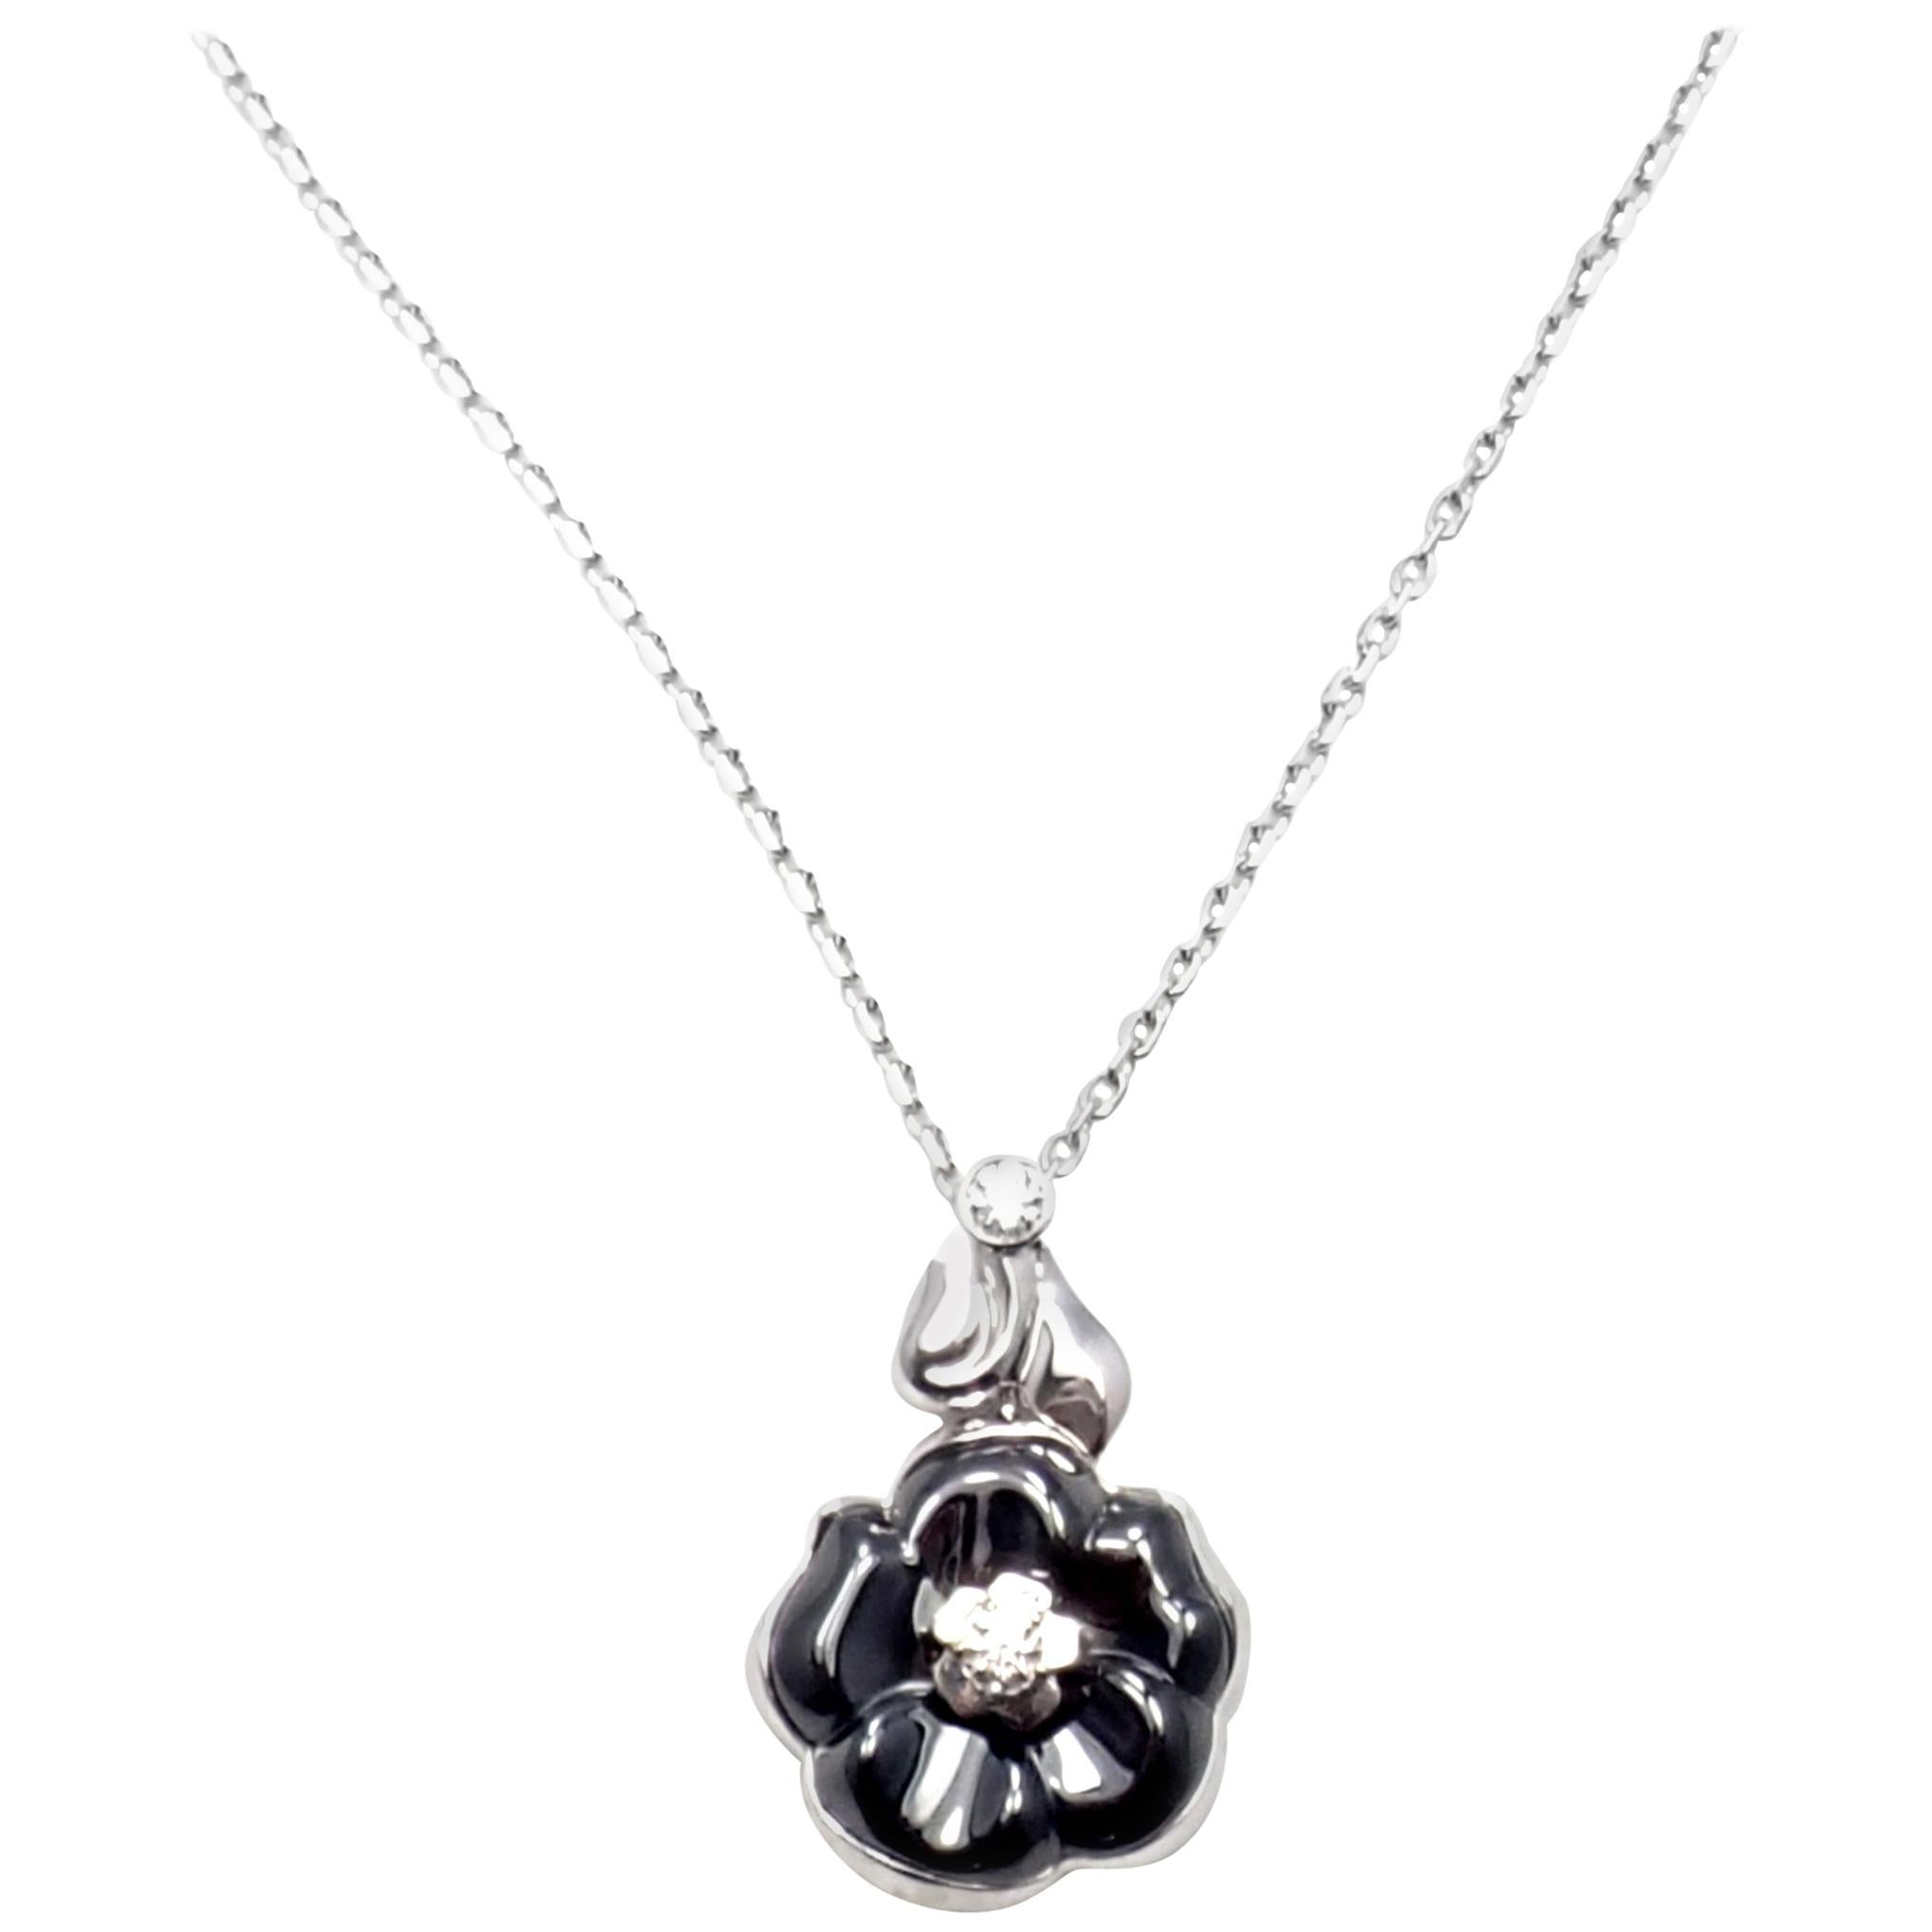 Vintage Chanel Black Camellia CC Statement Pearl Necklace